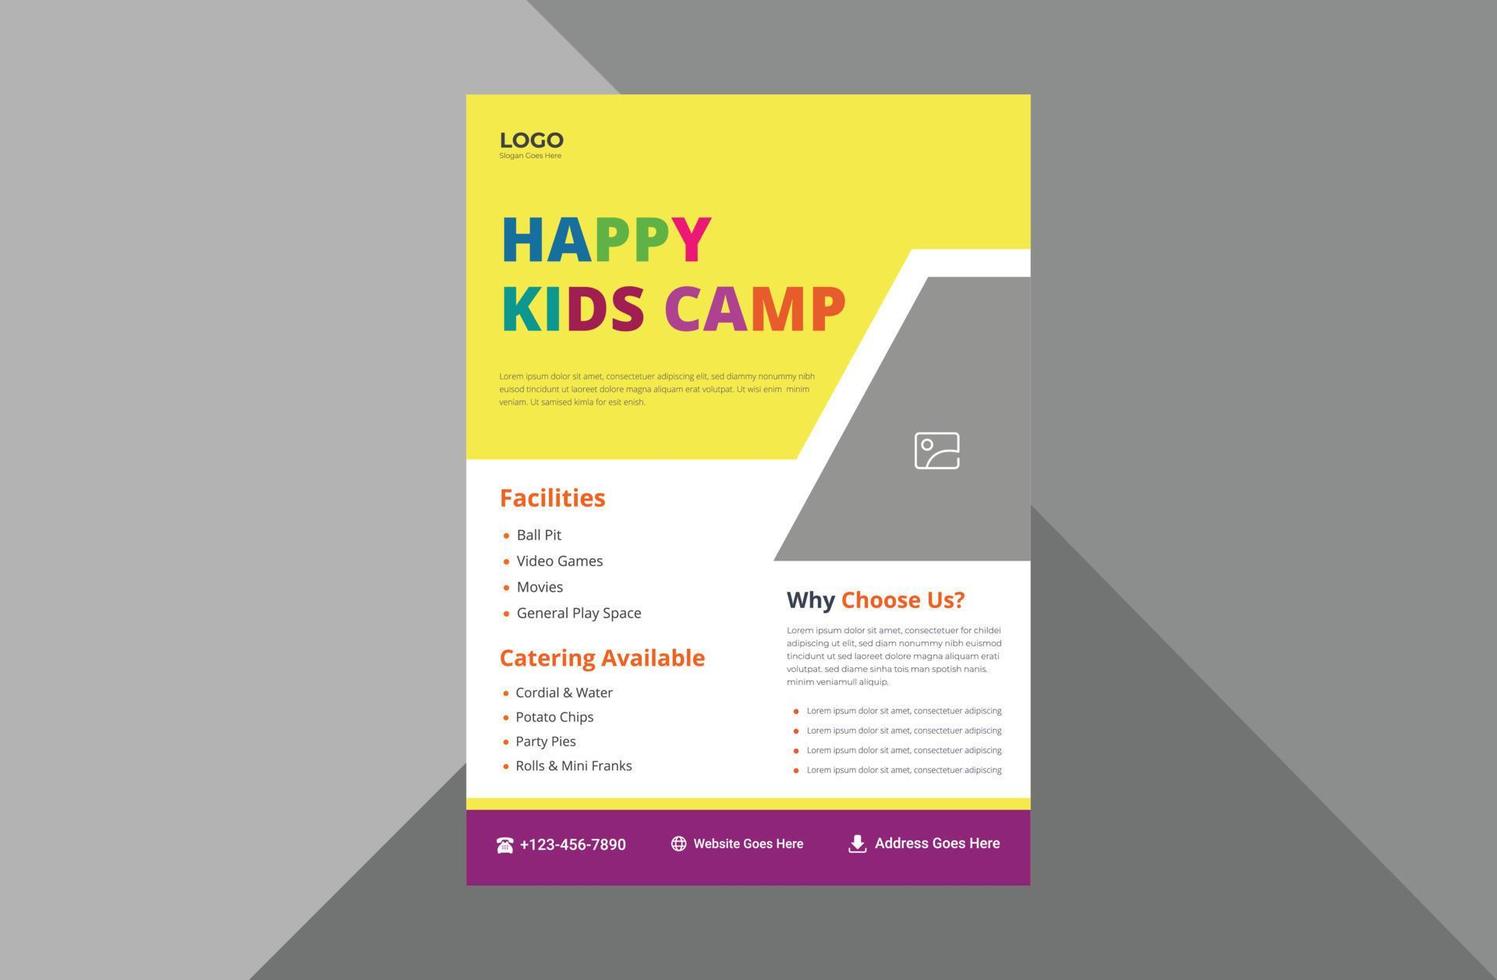 happy kids camp flyer mall. barn sommarläger affisch broschyr design. a4-mall, broschyrdesign, omslag, flygblad, affisch, tryckklar vektor